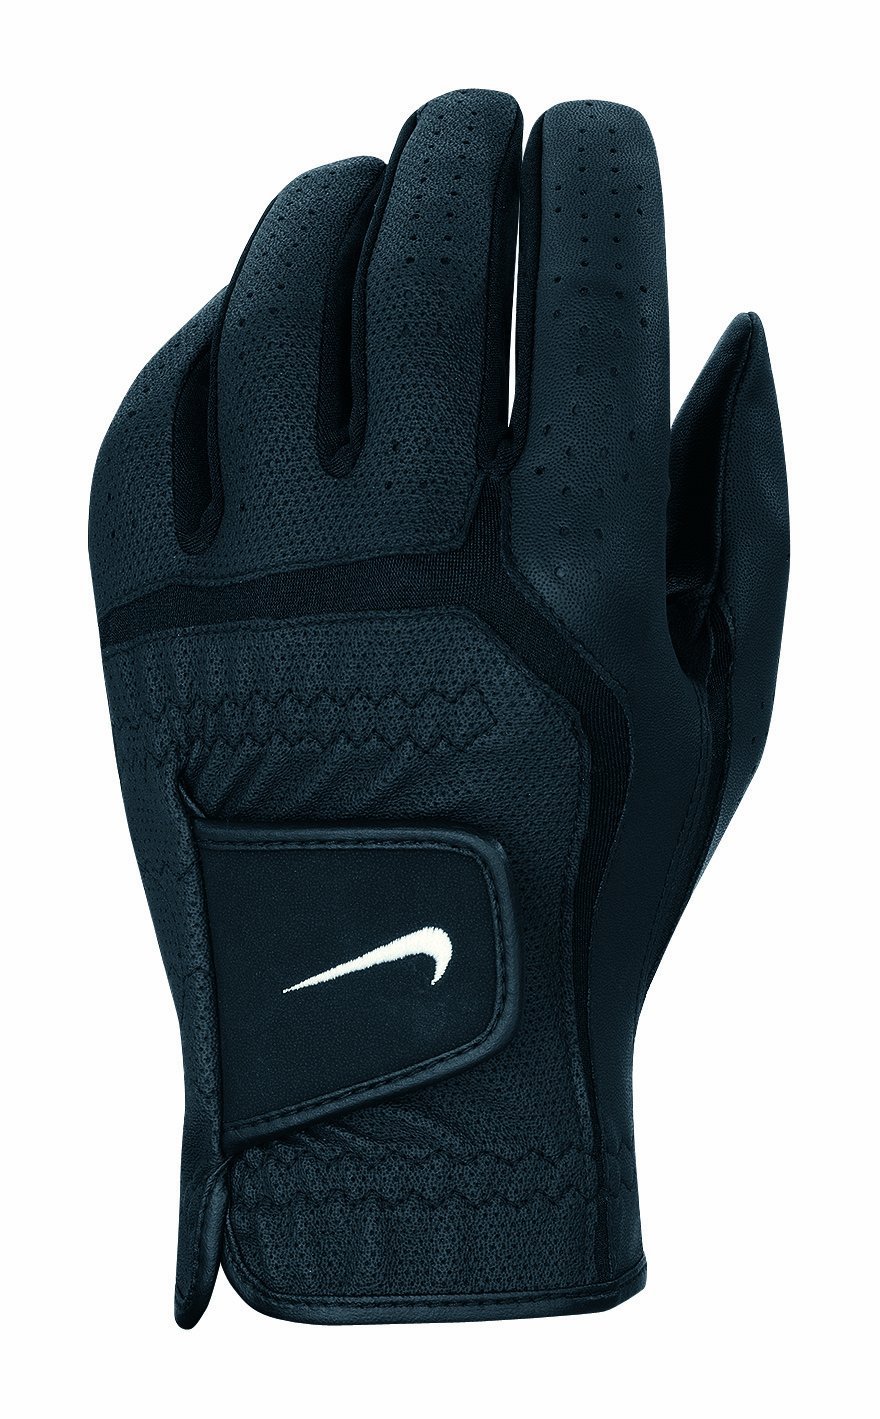 Buy Nike Mens Golf Gloves for Lowest 